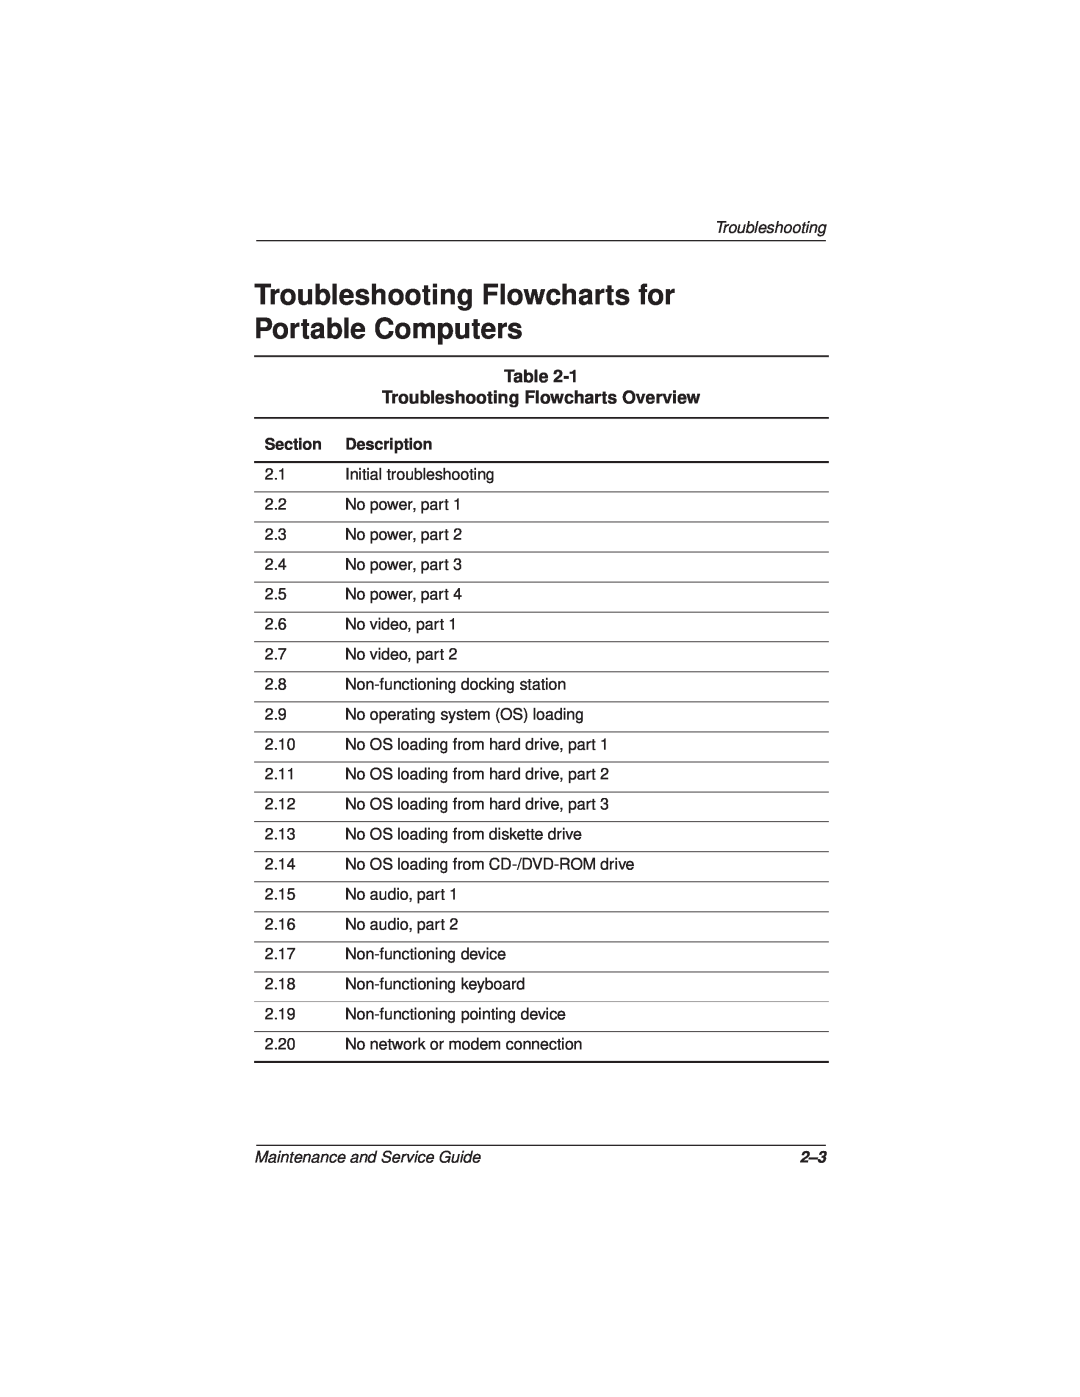 Compaq N110 manual Troubleshooting Flowcharts for Portable Computers, Troubleshooting Flowcharts Overview 